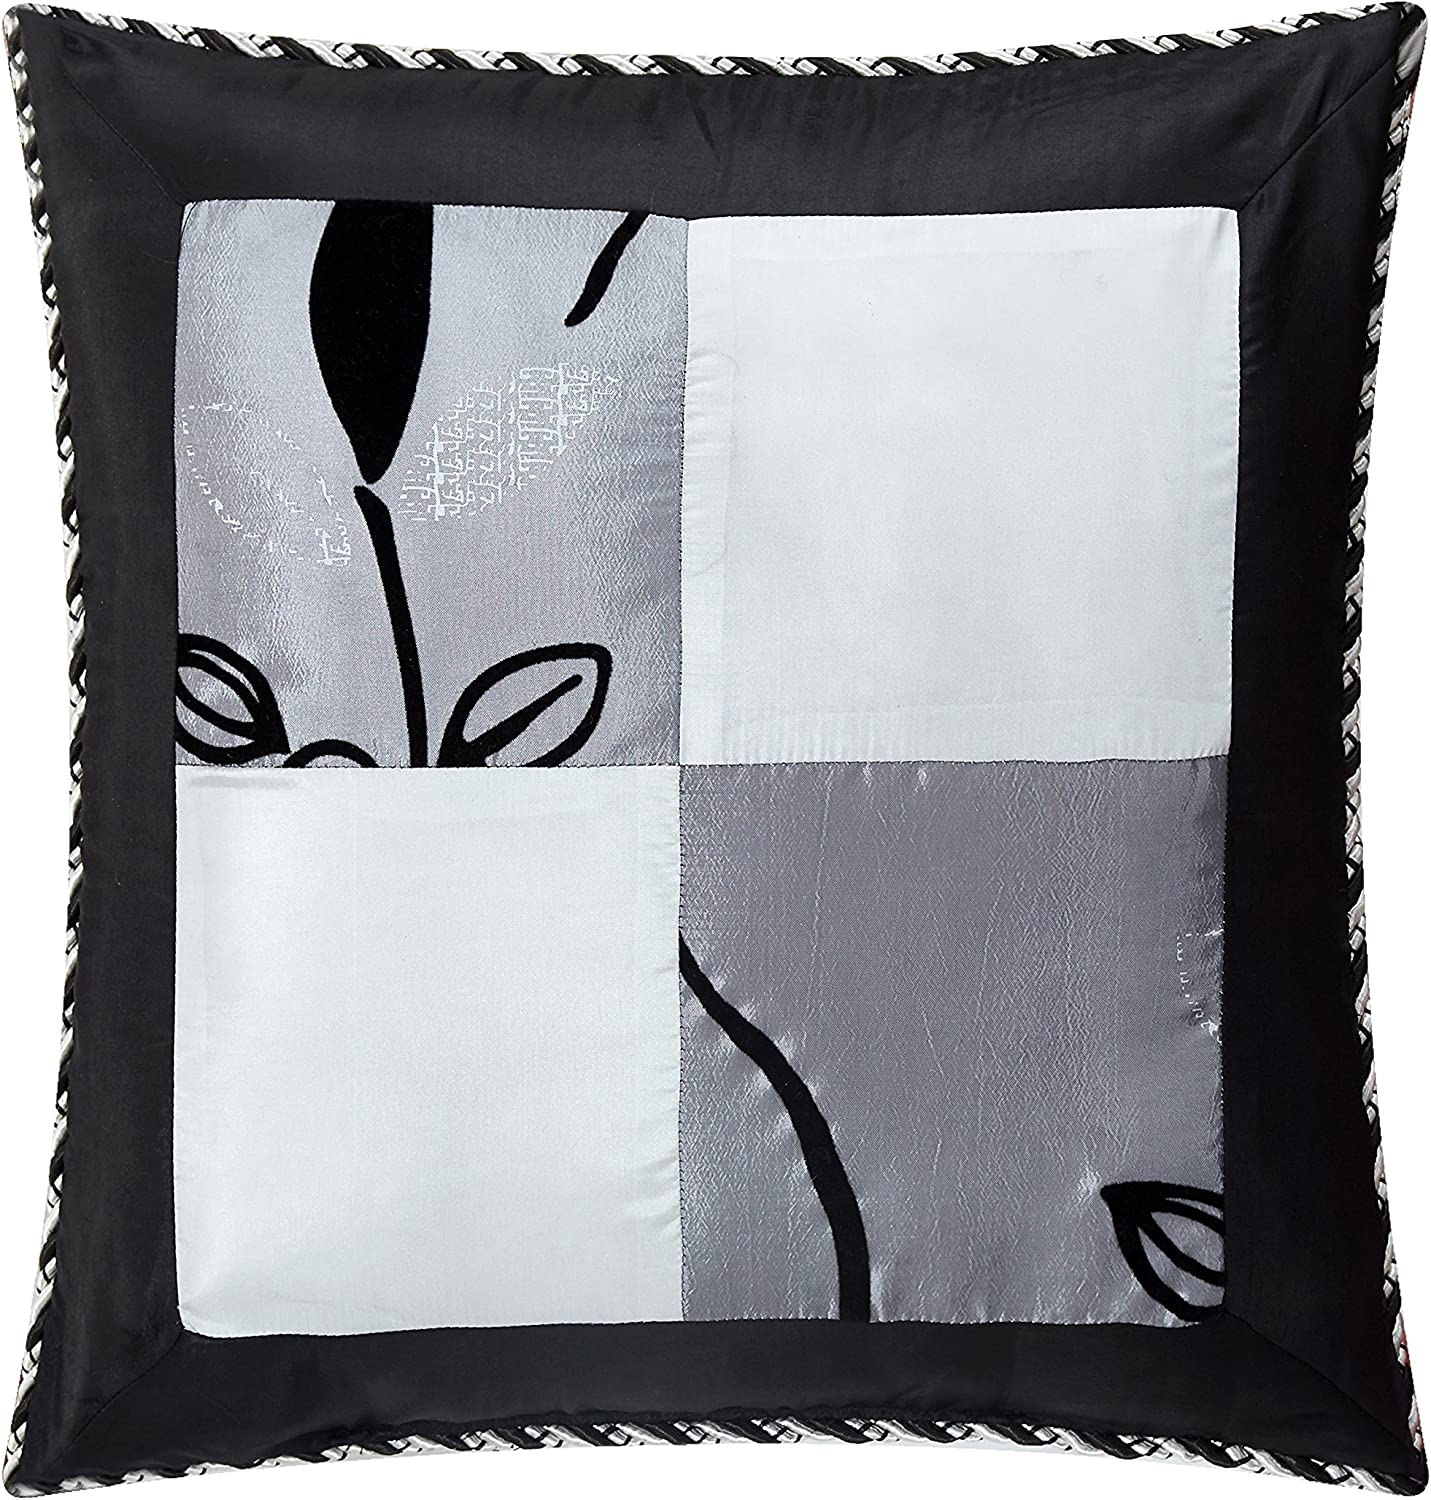 Pastora 7 Piece Black, Silver, and White Embellished Comforter Set